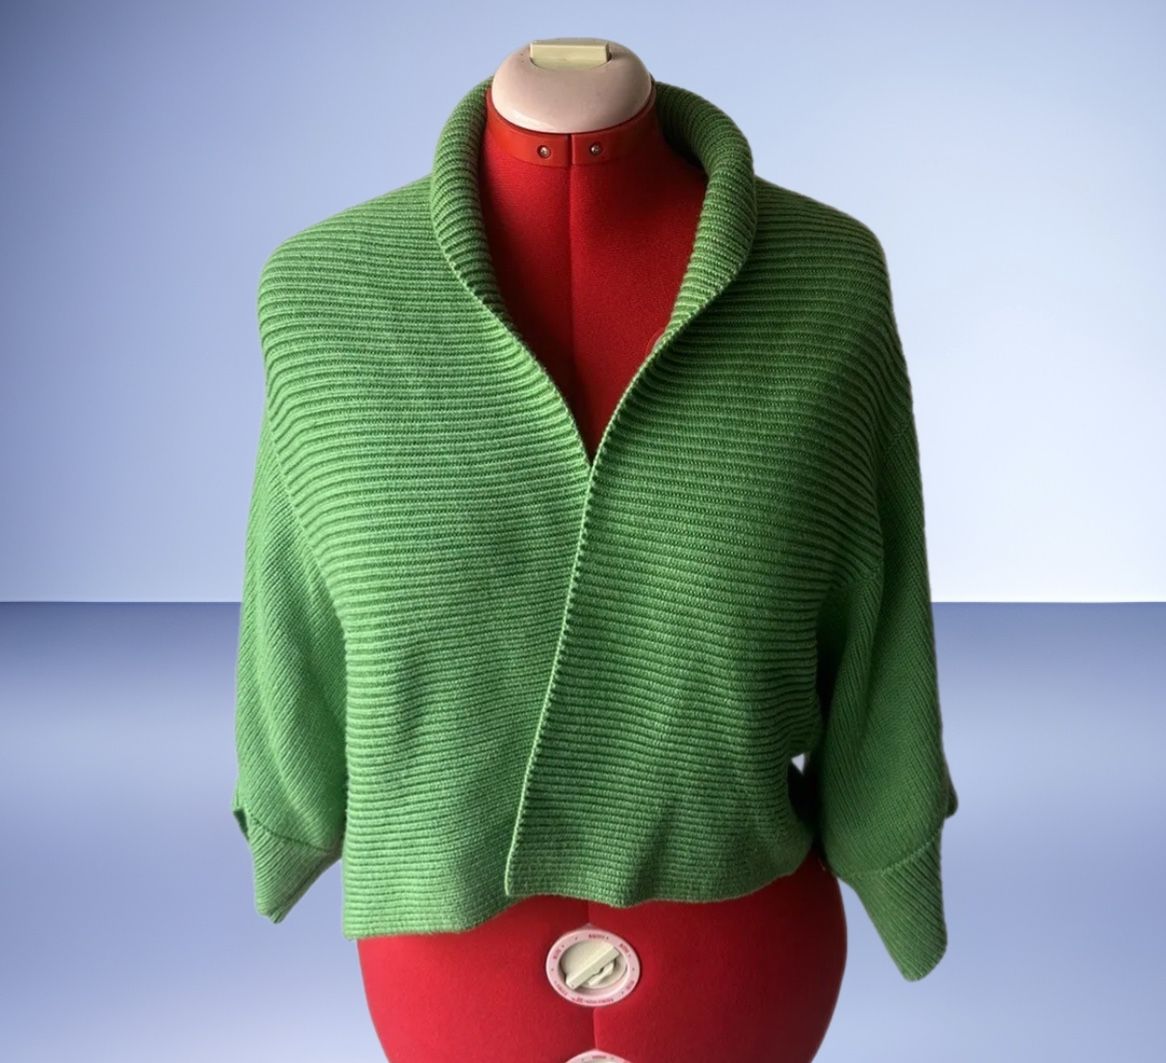 Michael Kors Cardigan size L Green Knit MSRP $275